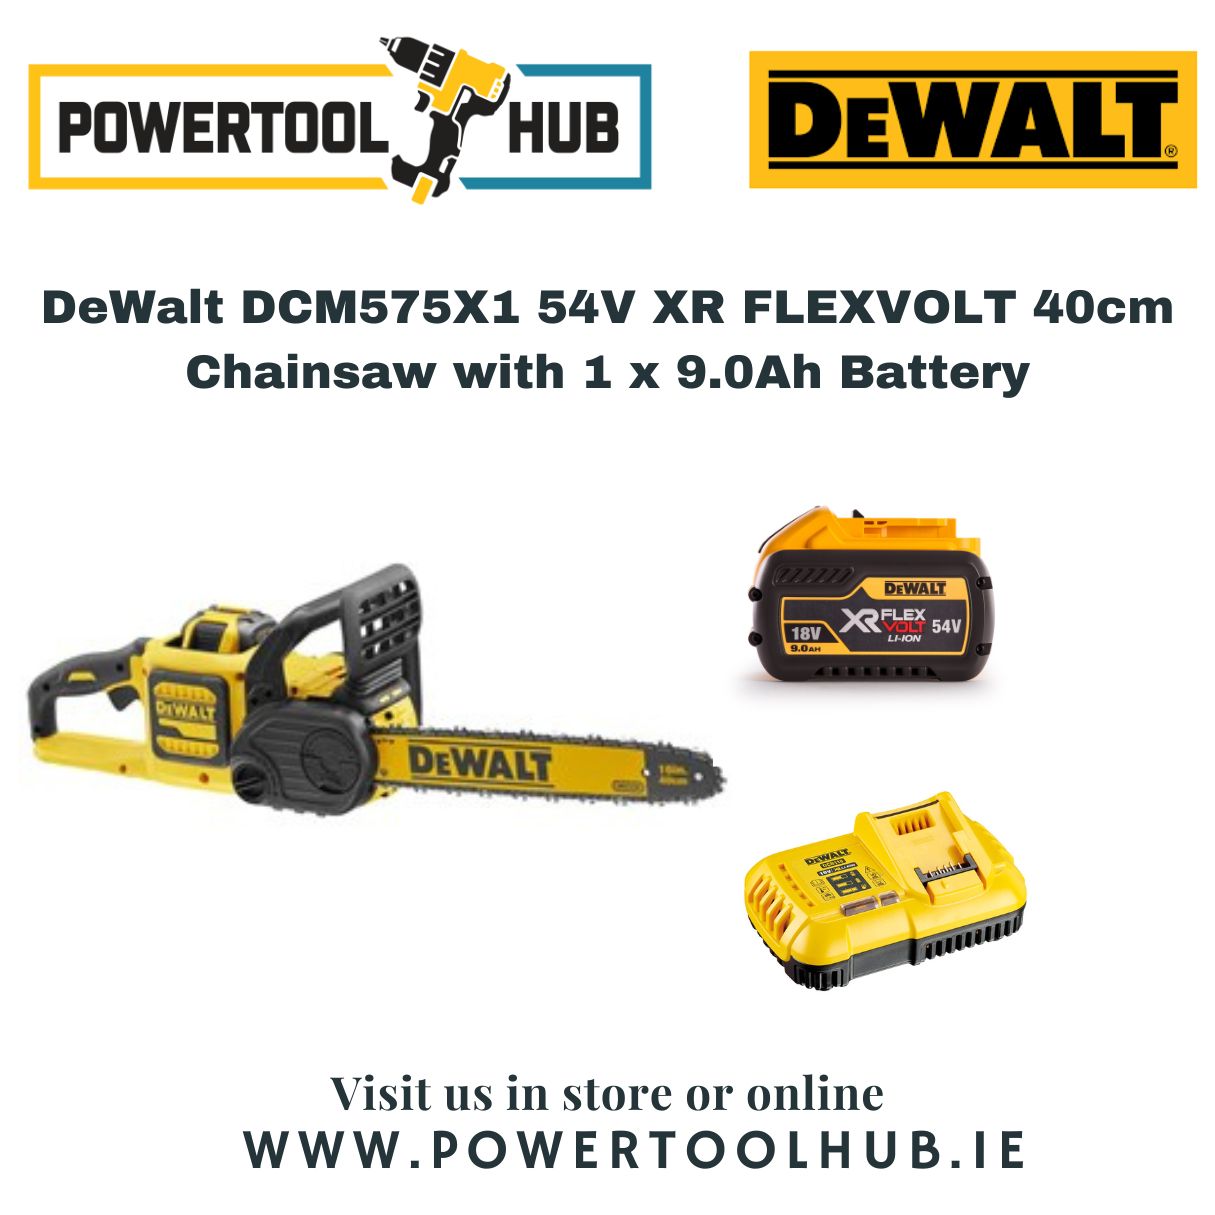 Dewalt 54 Volt Flexvolt Chainsaw, 1 9.0Ah Batteries